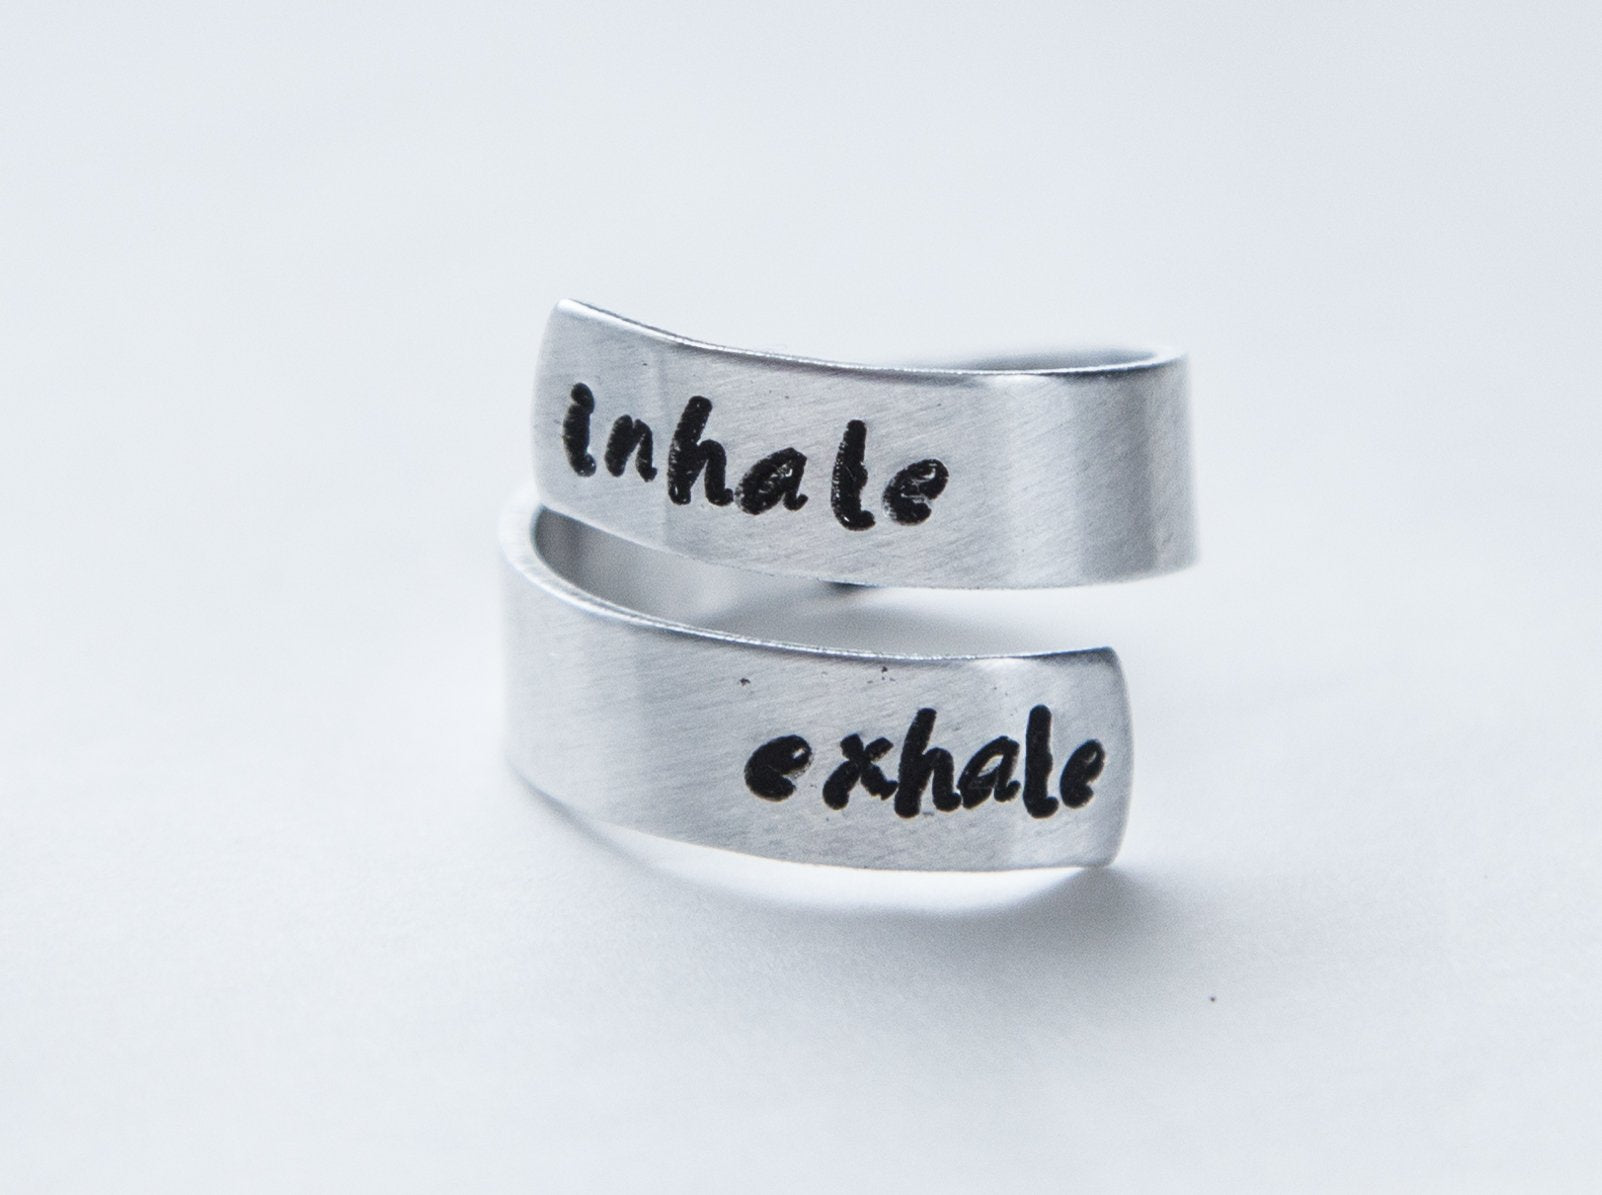 Inhale exhale ring, Yoga ring, yoga lover gift, meditation help